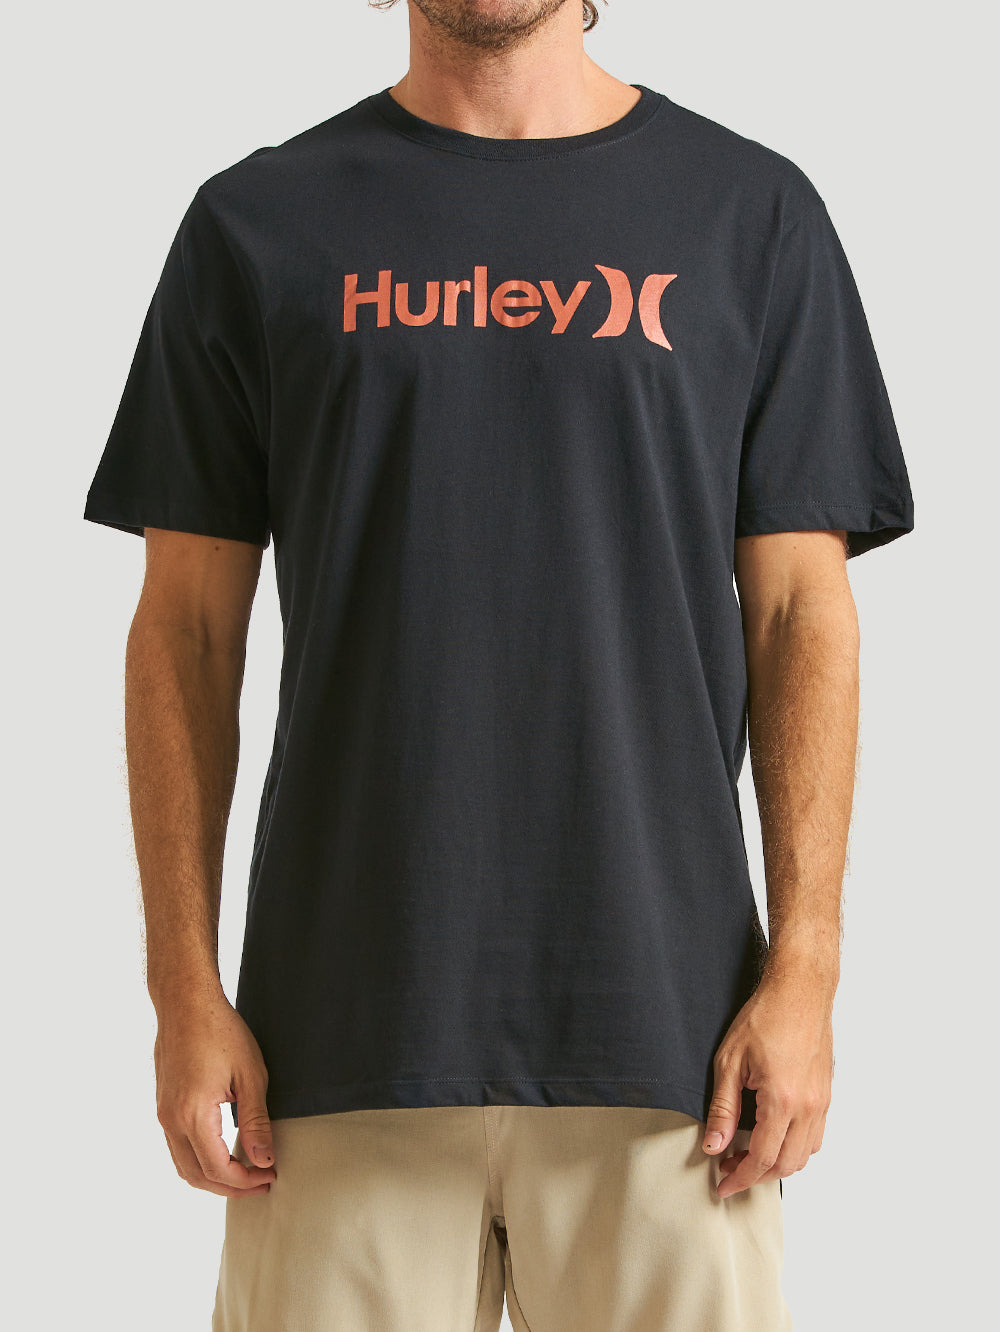 Camiseta Hurley O&O Solid Preto